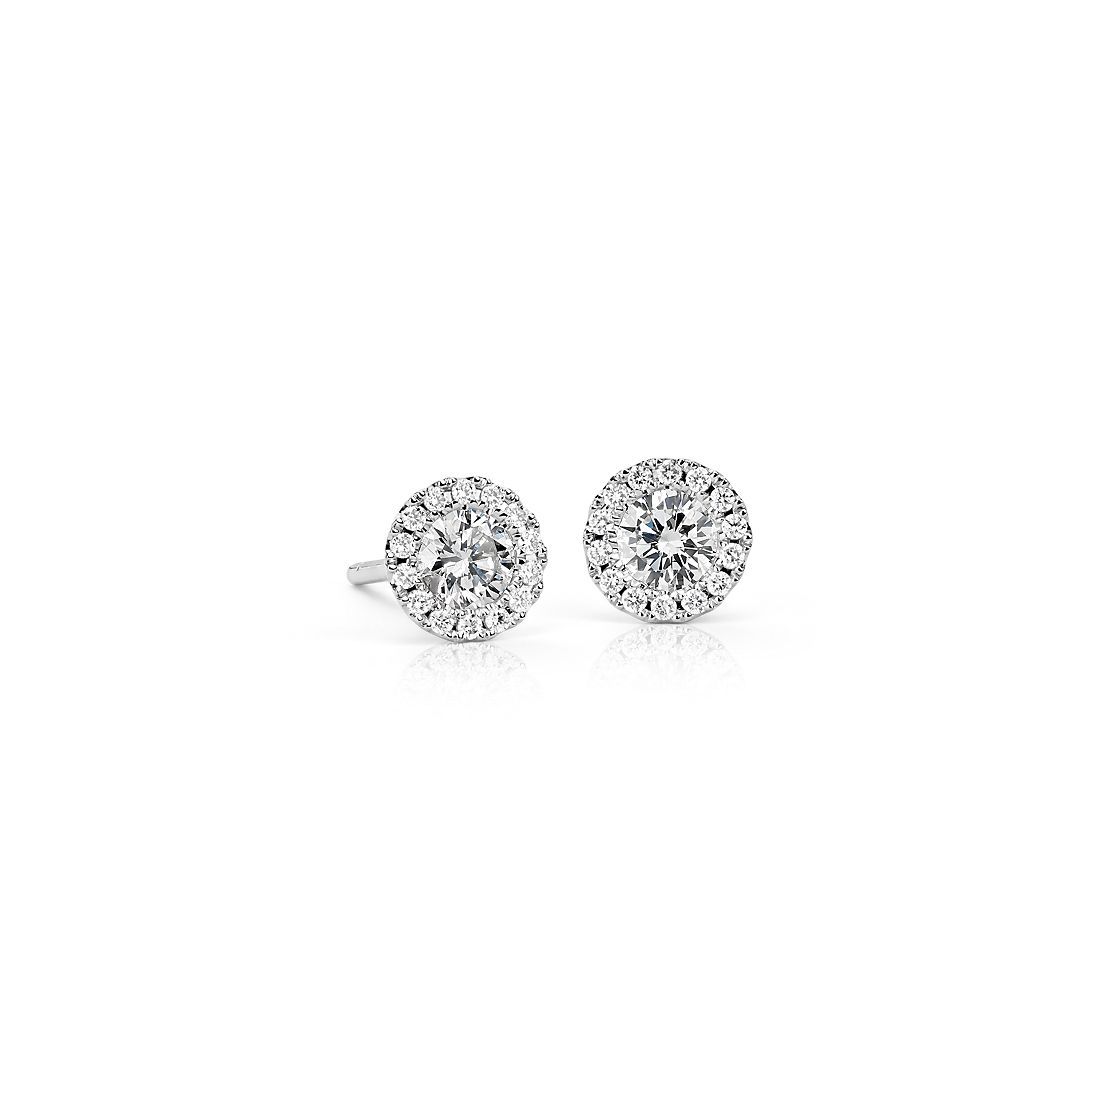 Martini Halo Diamond Stud Earrings in 14k White Gold (1/2 ct. tw.) | Blue Nile | Blue Nile